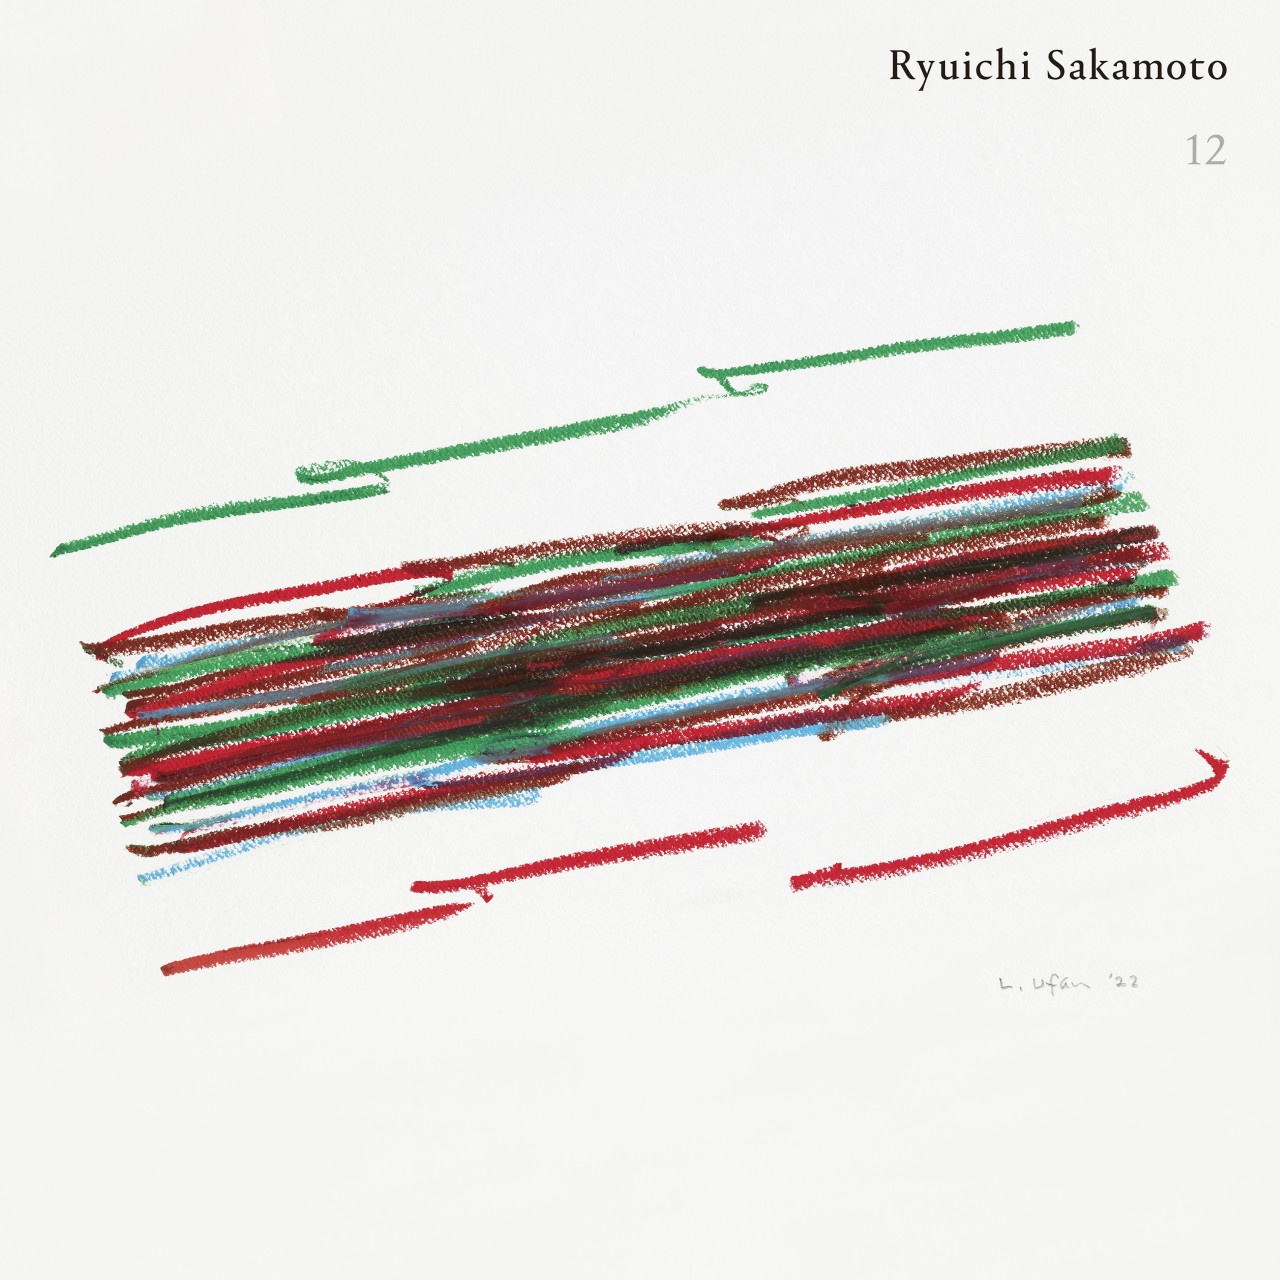 Ryuichi Sakamoto agenda su primer disco en seis años